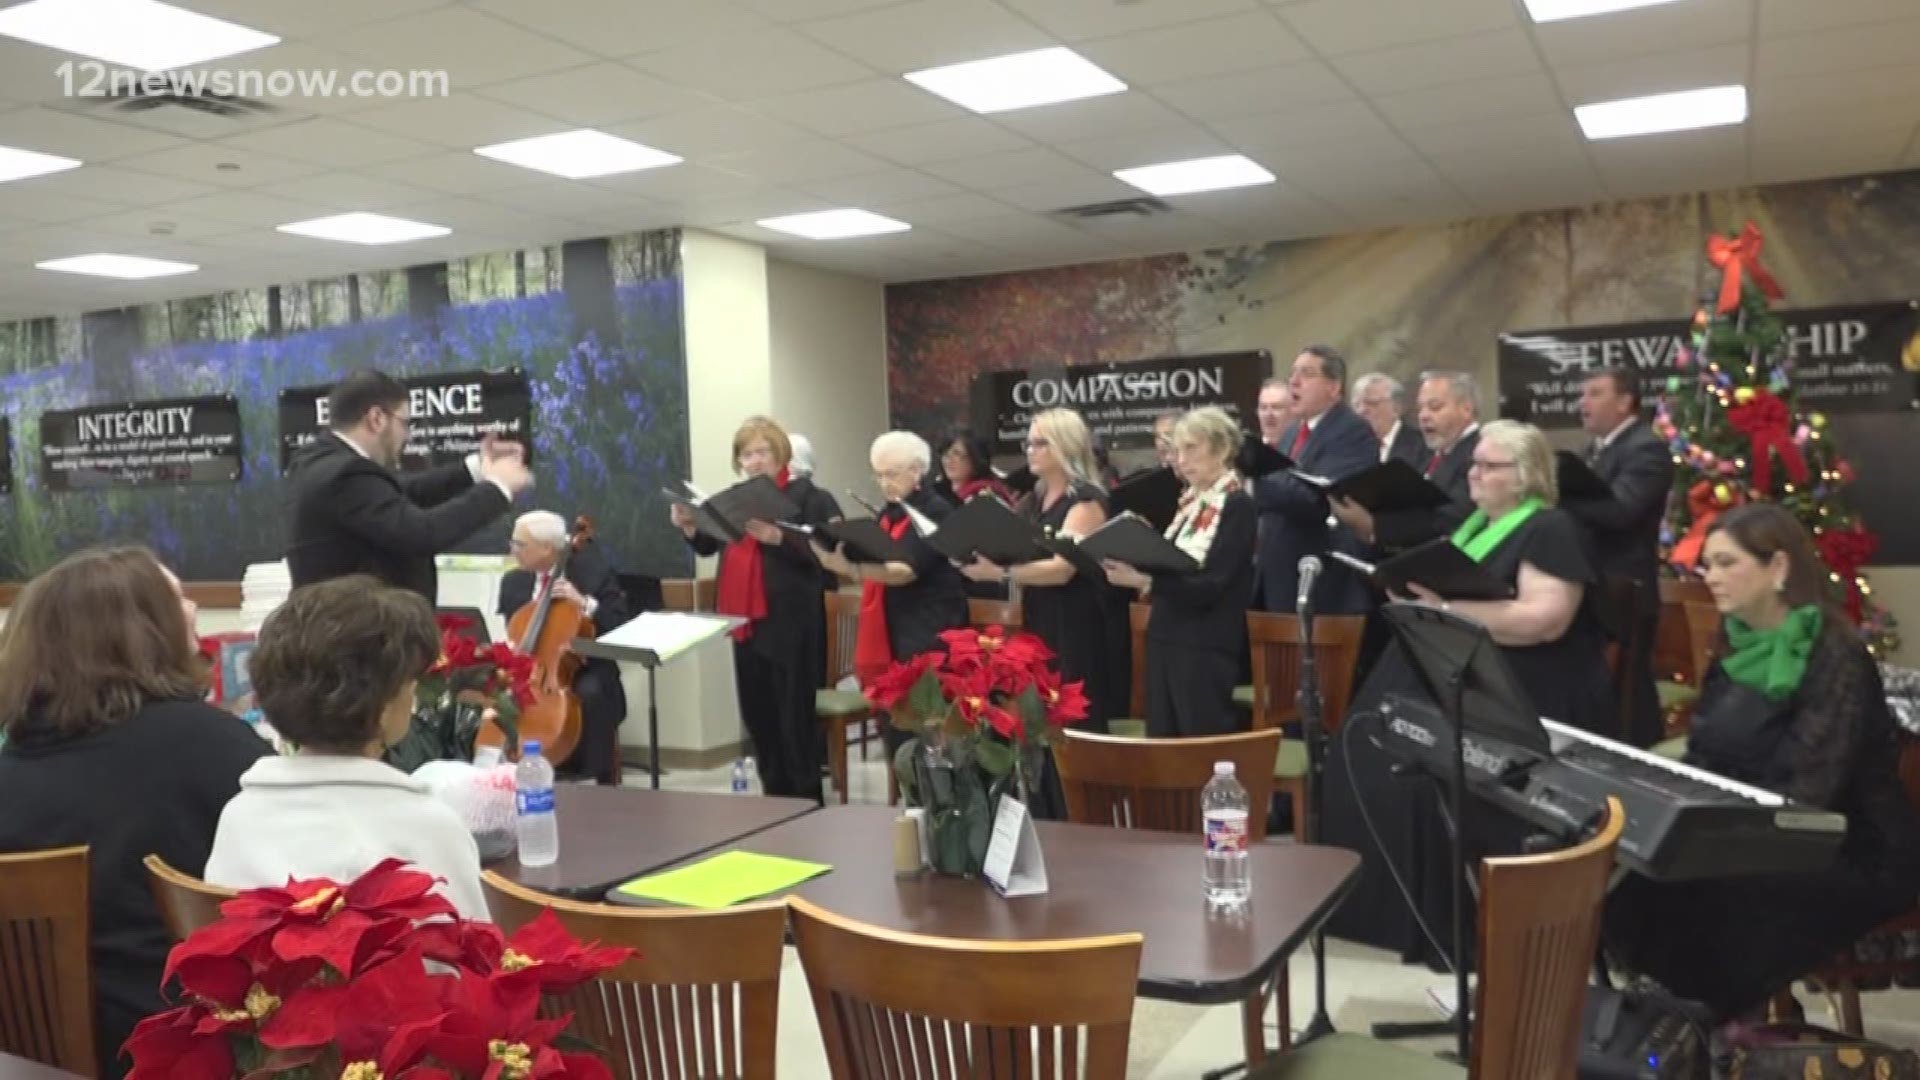 St. Jude Catholic Church choir brings Christmas cheer to Christus St. Elizabeth Hospital